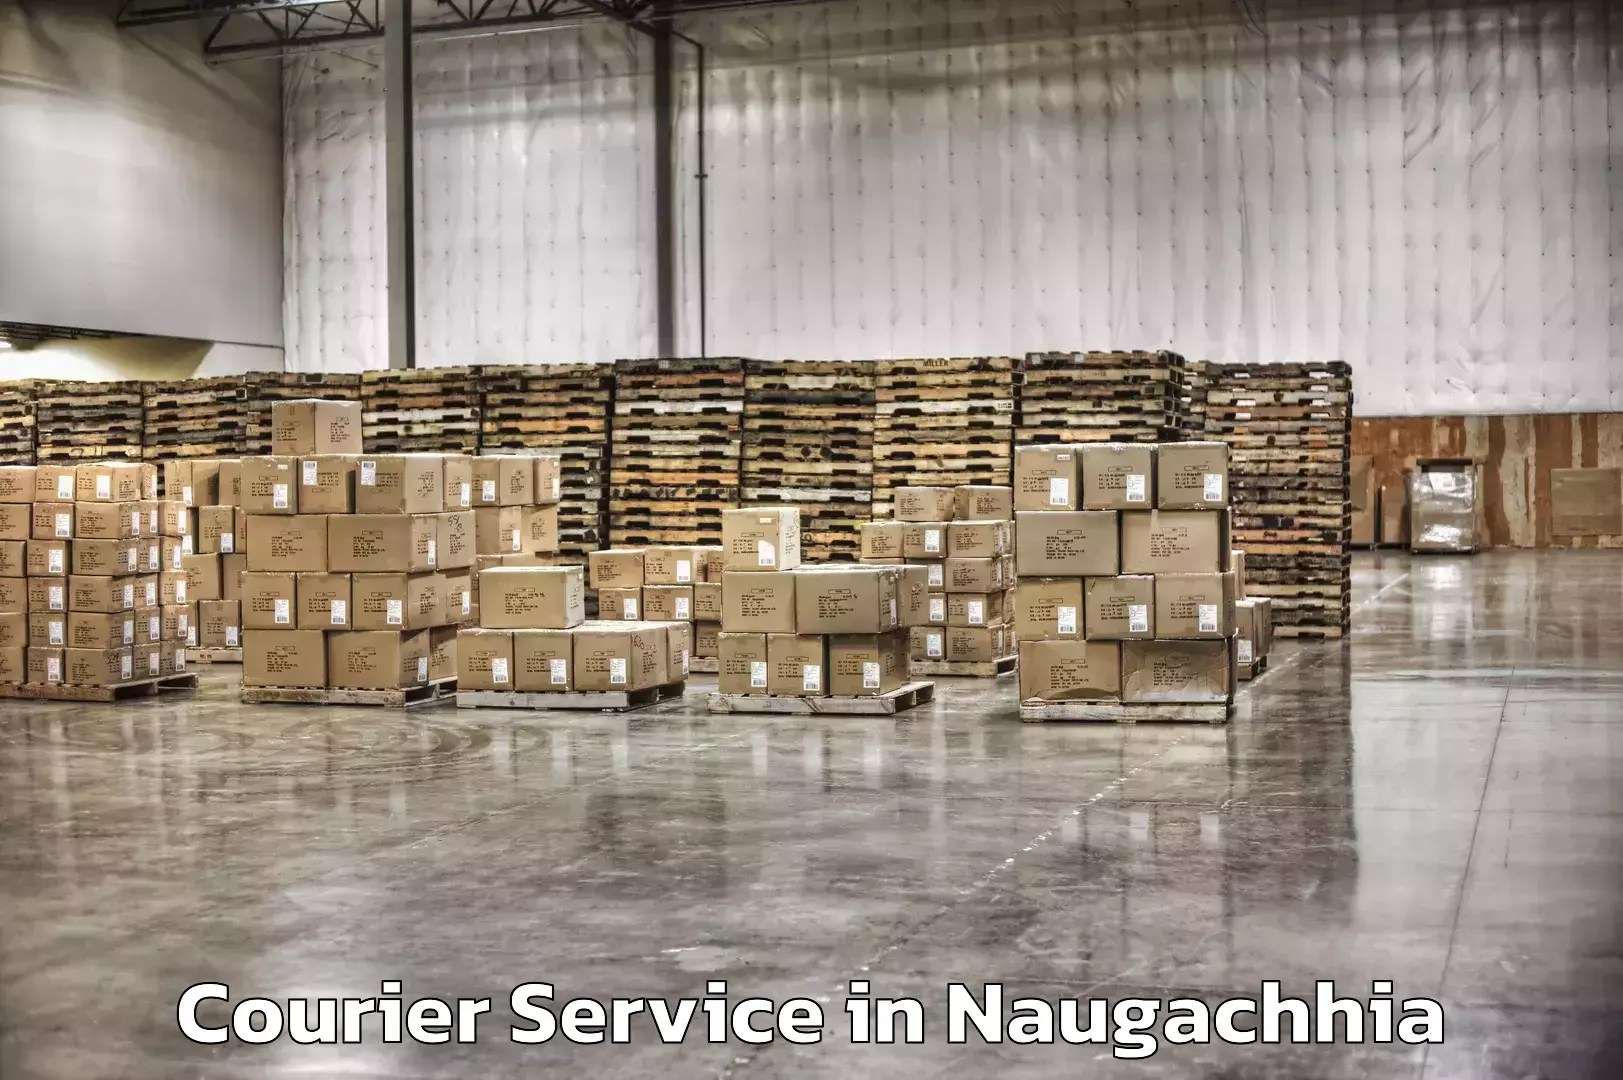 Small parcel delivery in Naugachhia